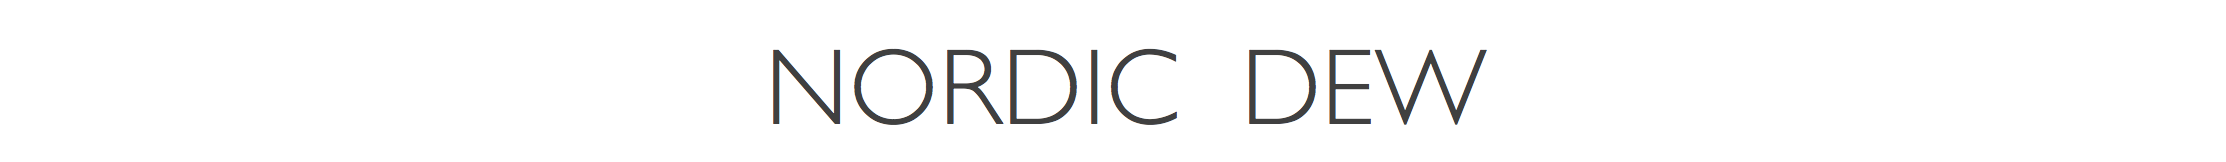 Nordic Dew logo